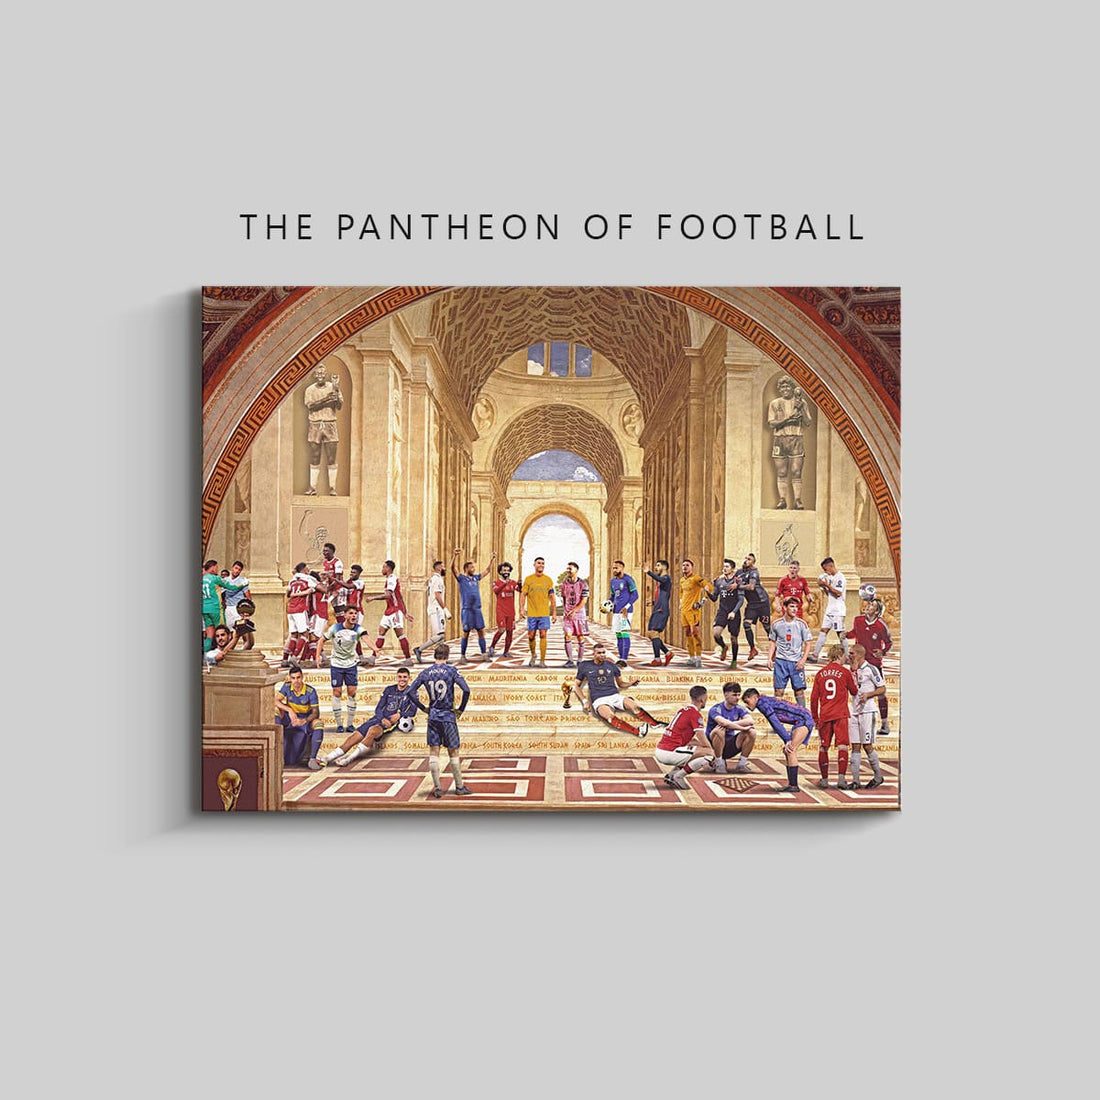 The Pantheon of Football